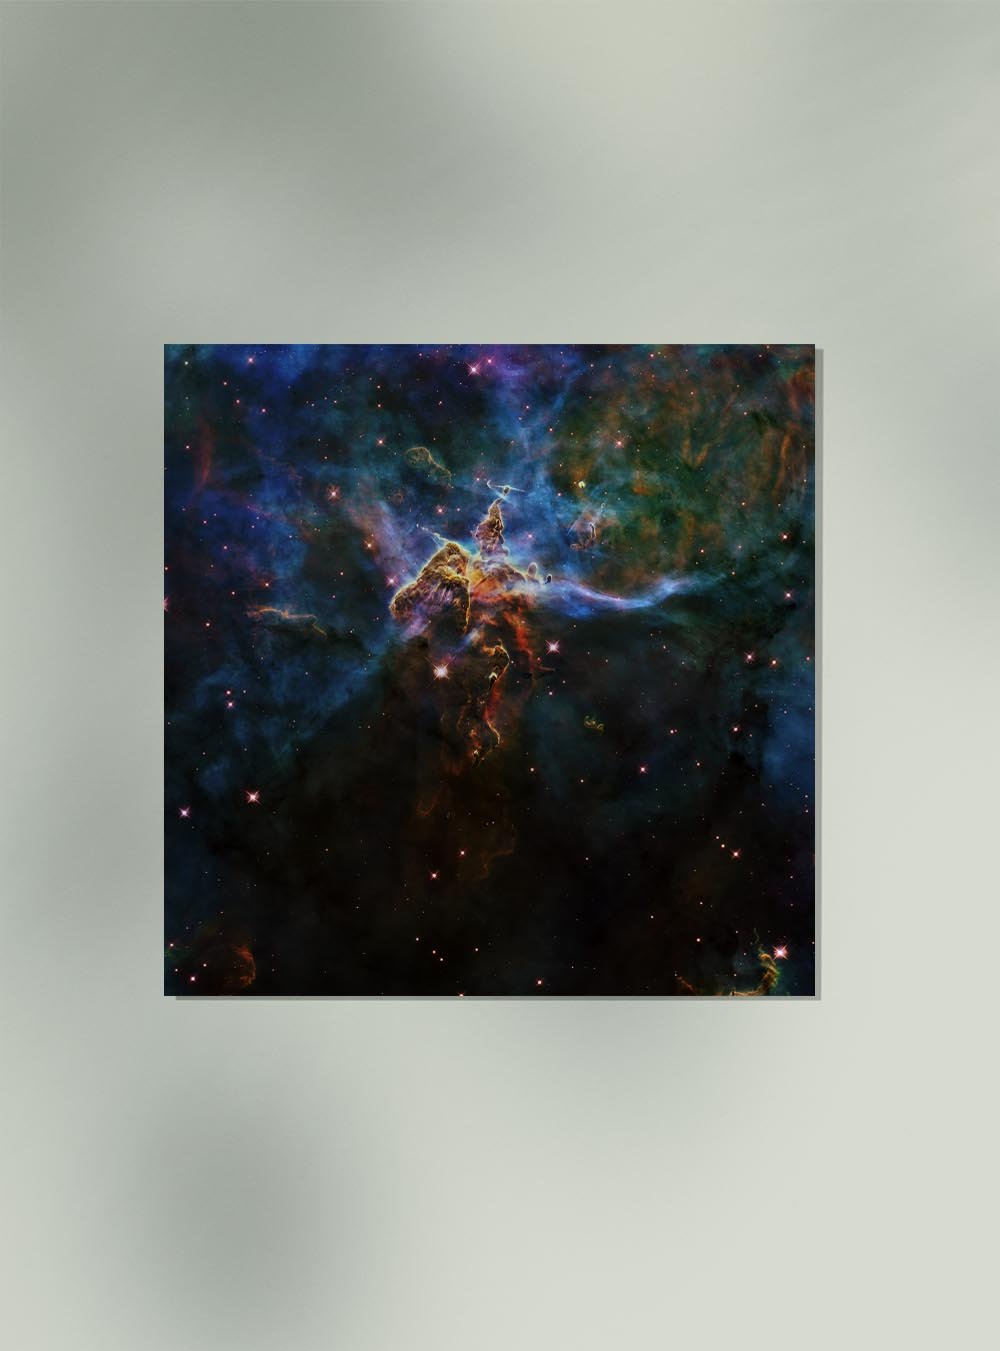 Image of a nebula taken using a NASA telescope, Zoom out NASA